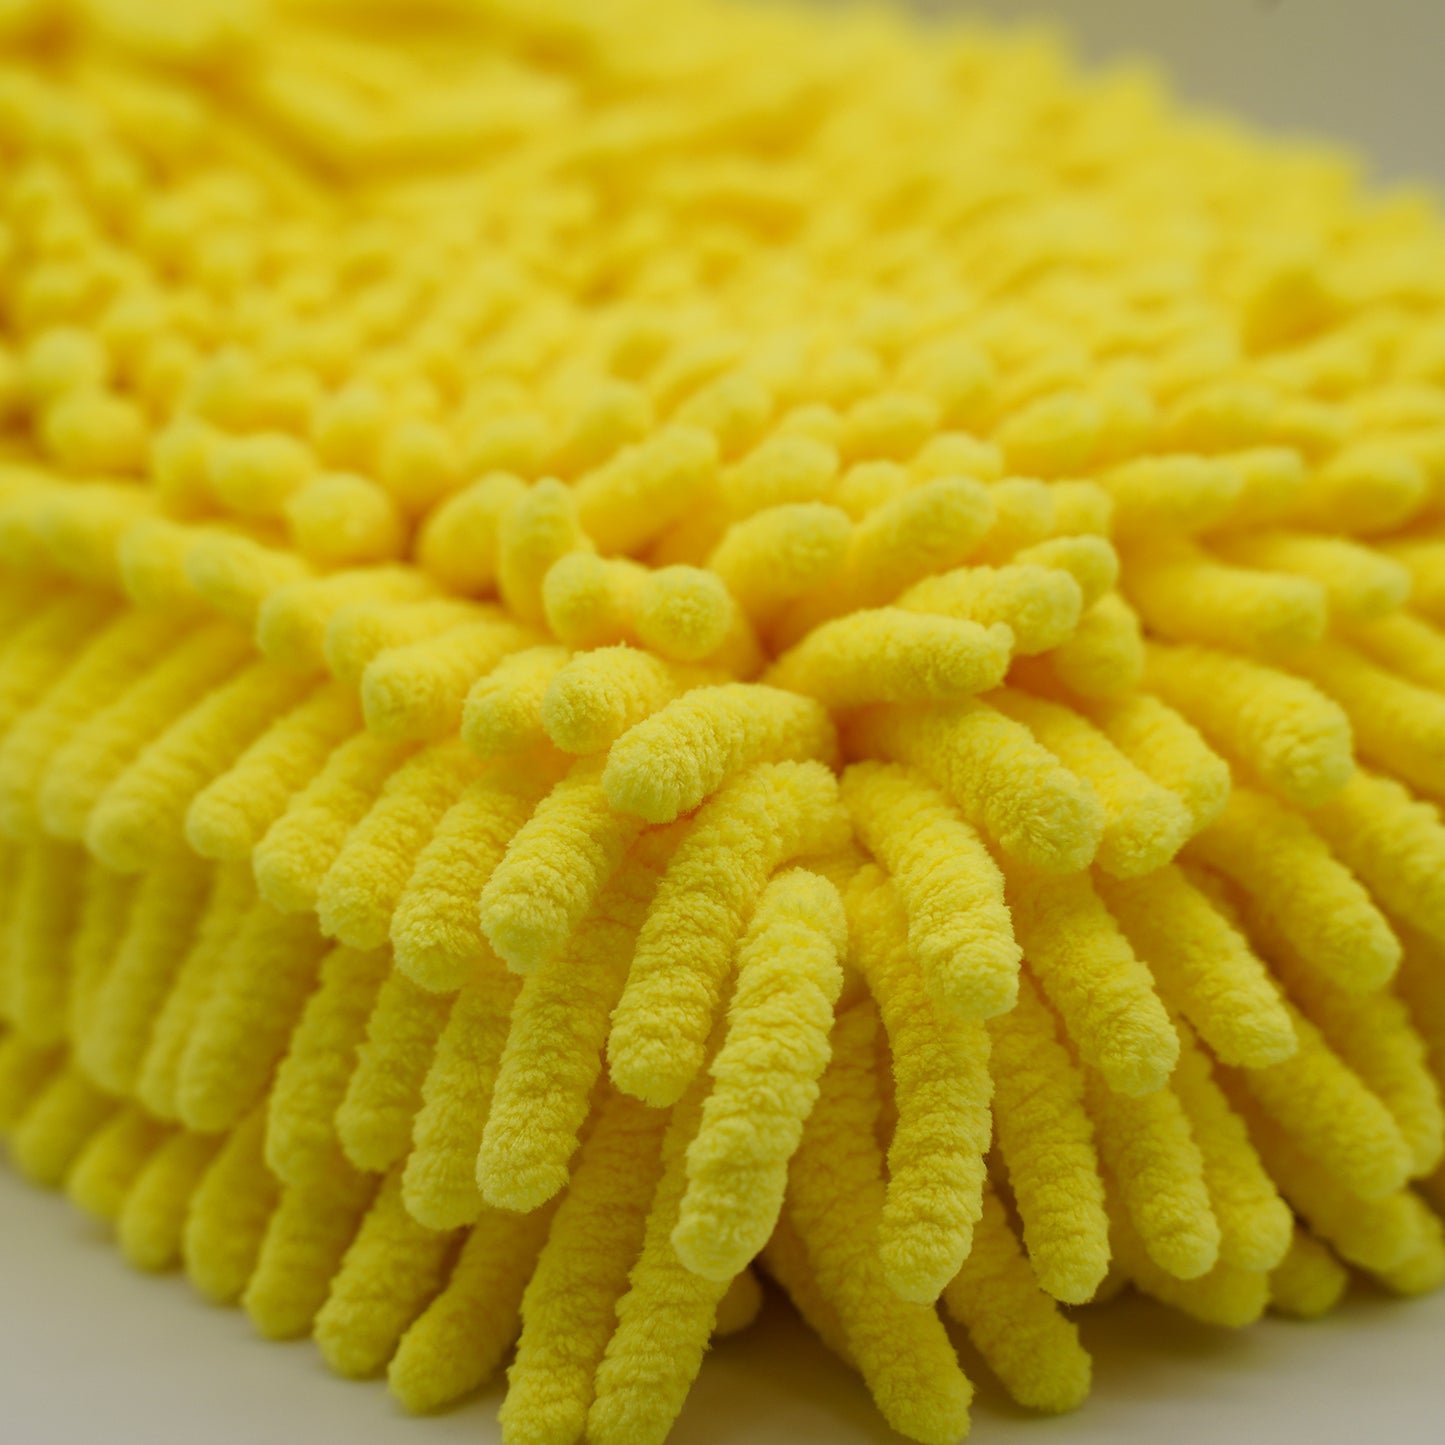 Close up image of the wash mitt